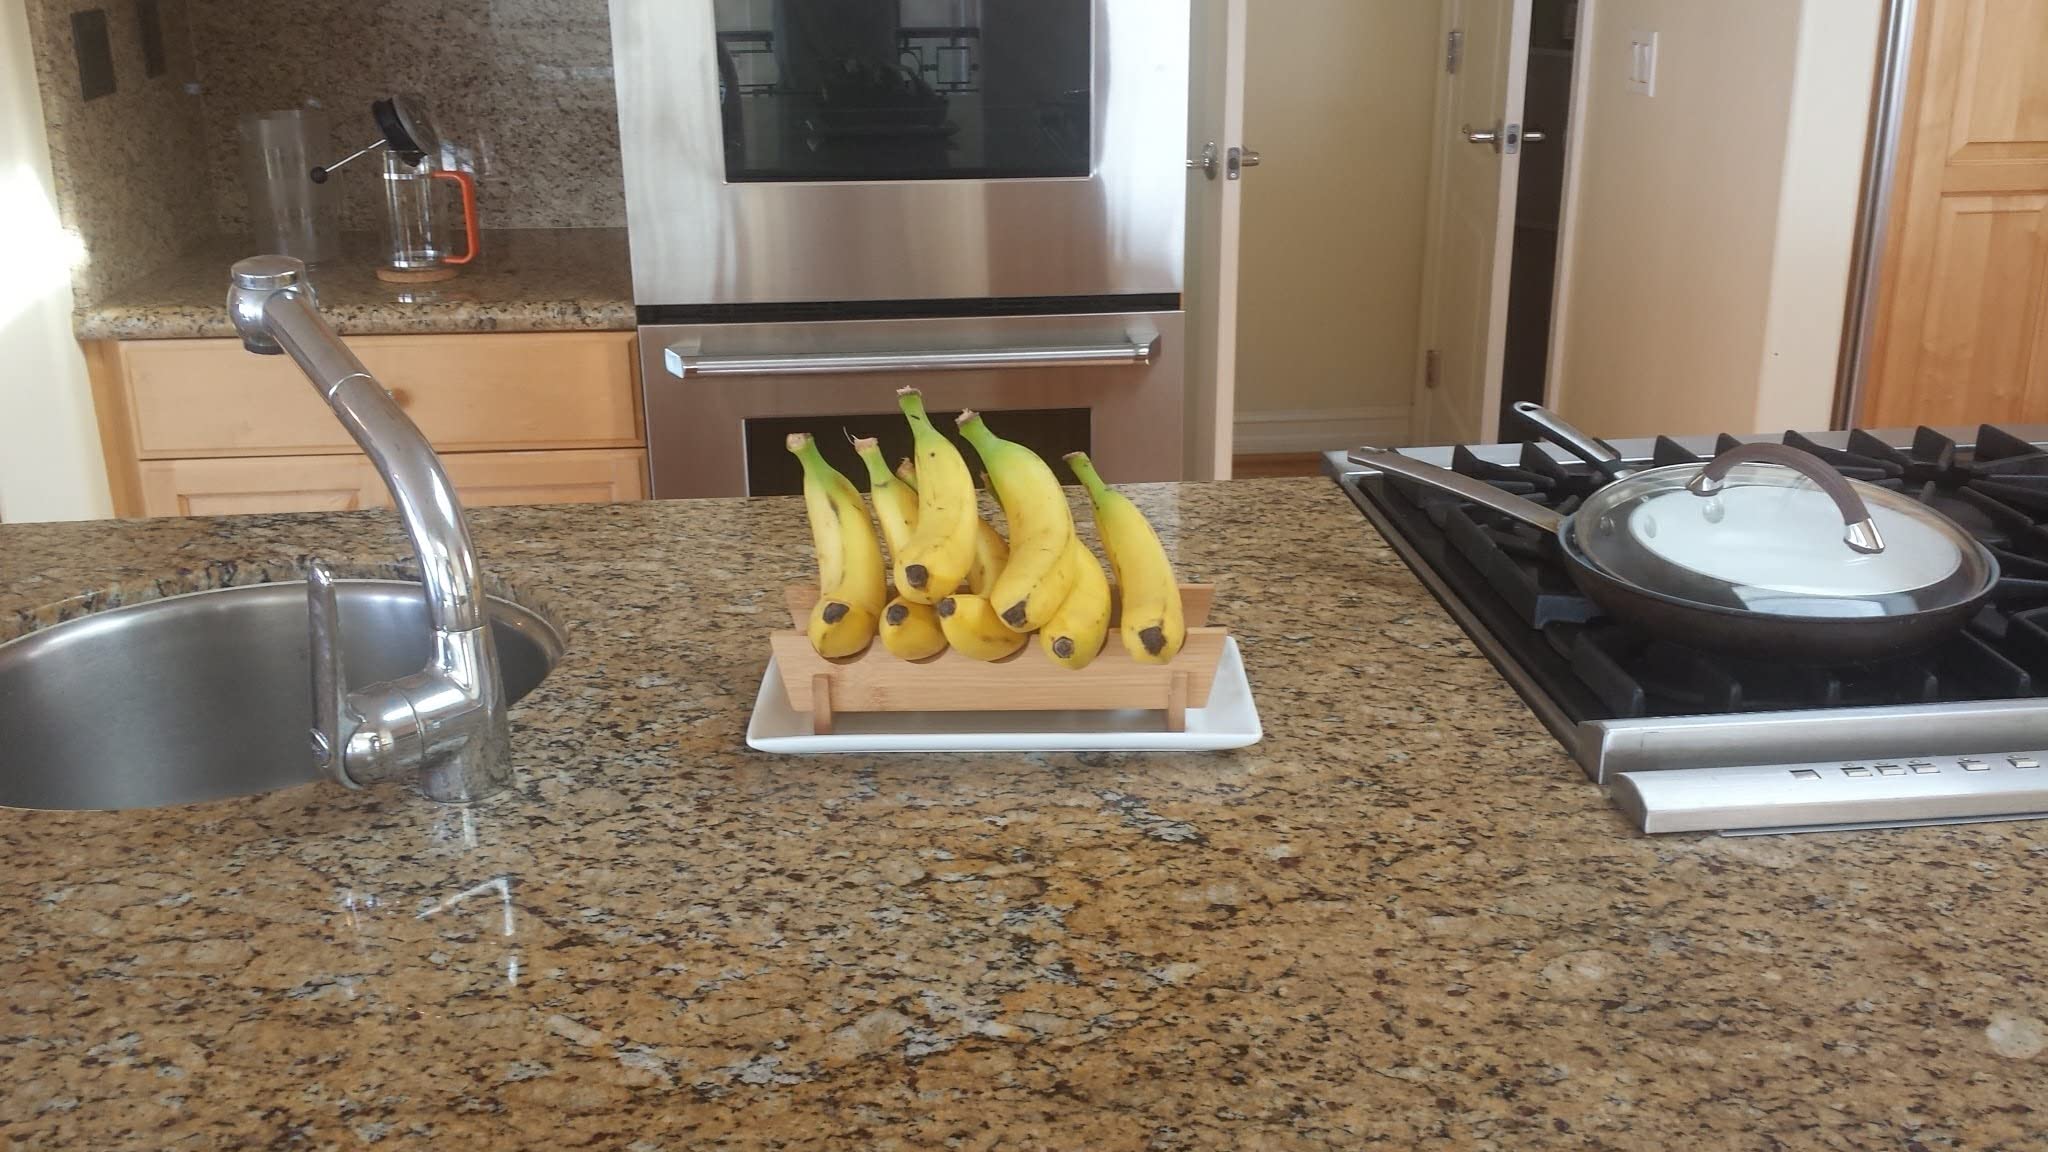 Bananarest Banana Holder - The Best Way To Store Bananas